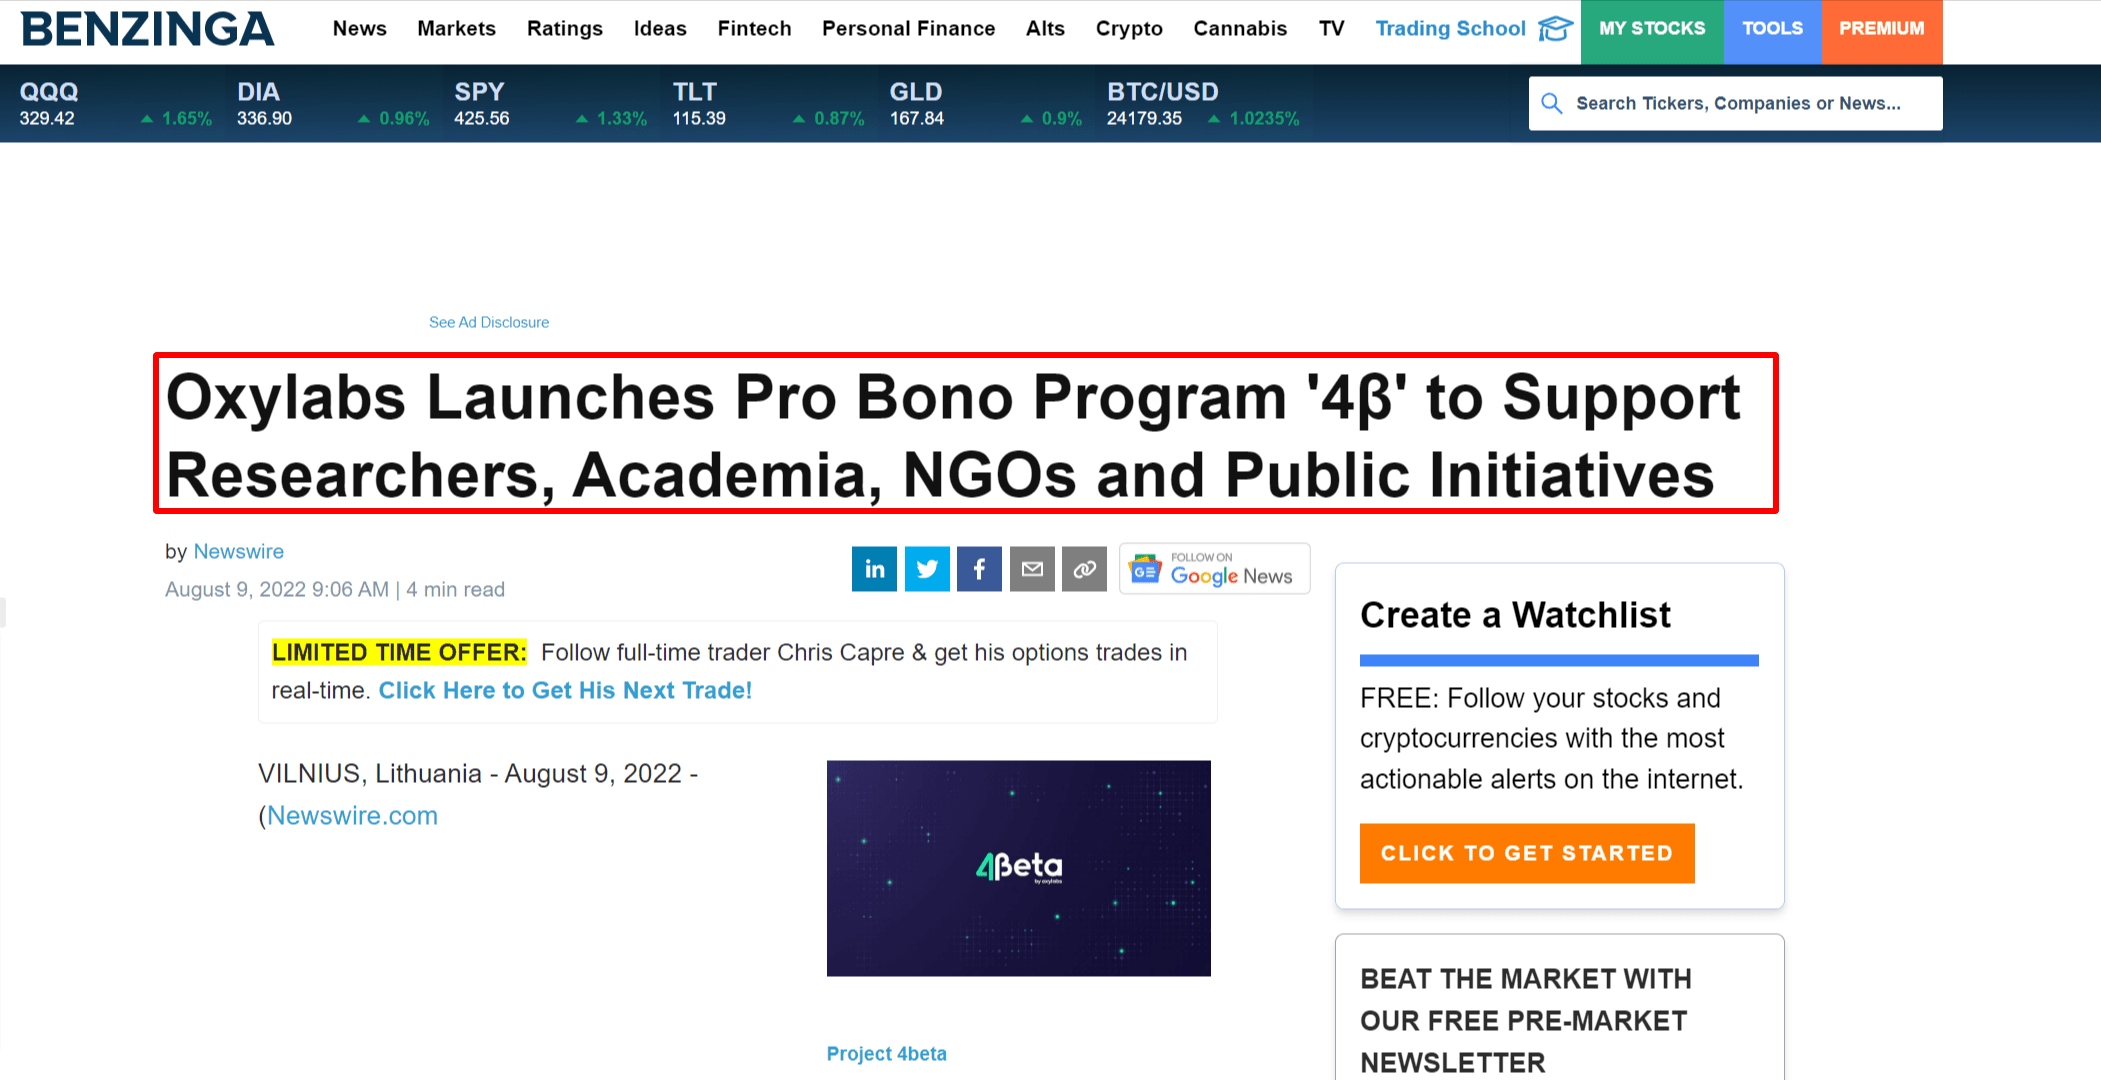 Oxylabs Launches Pro Bono Program